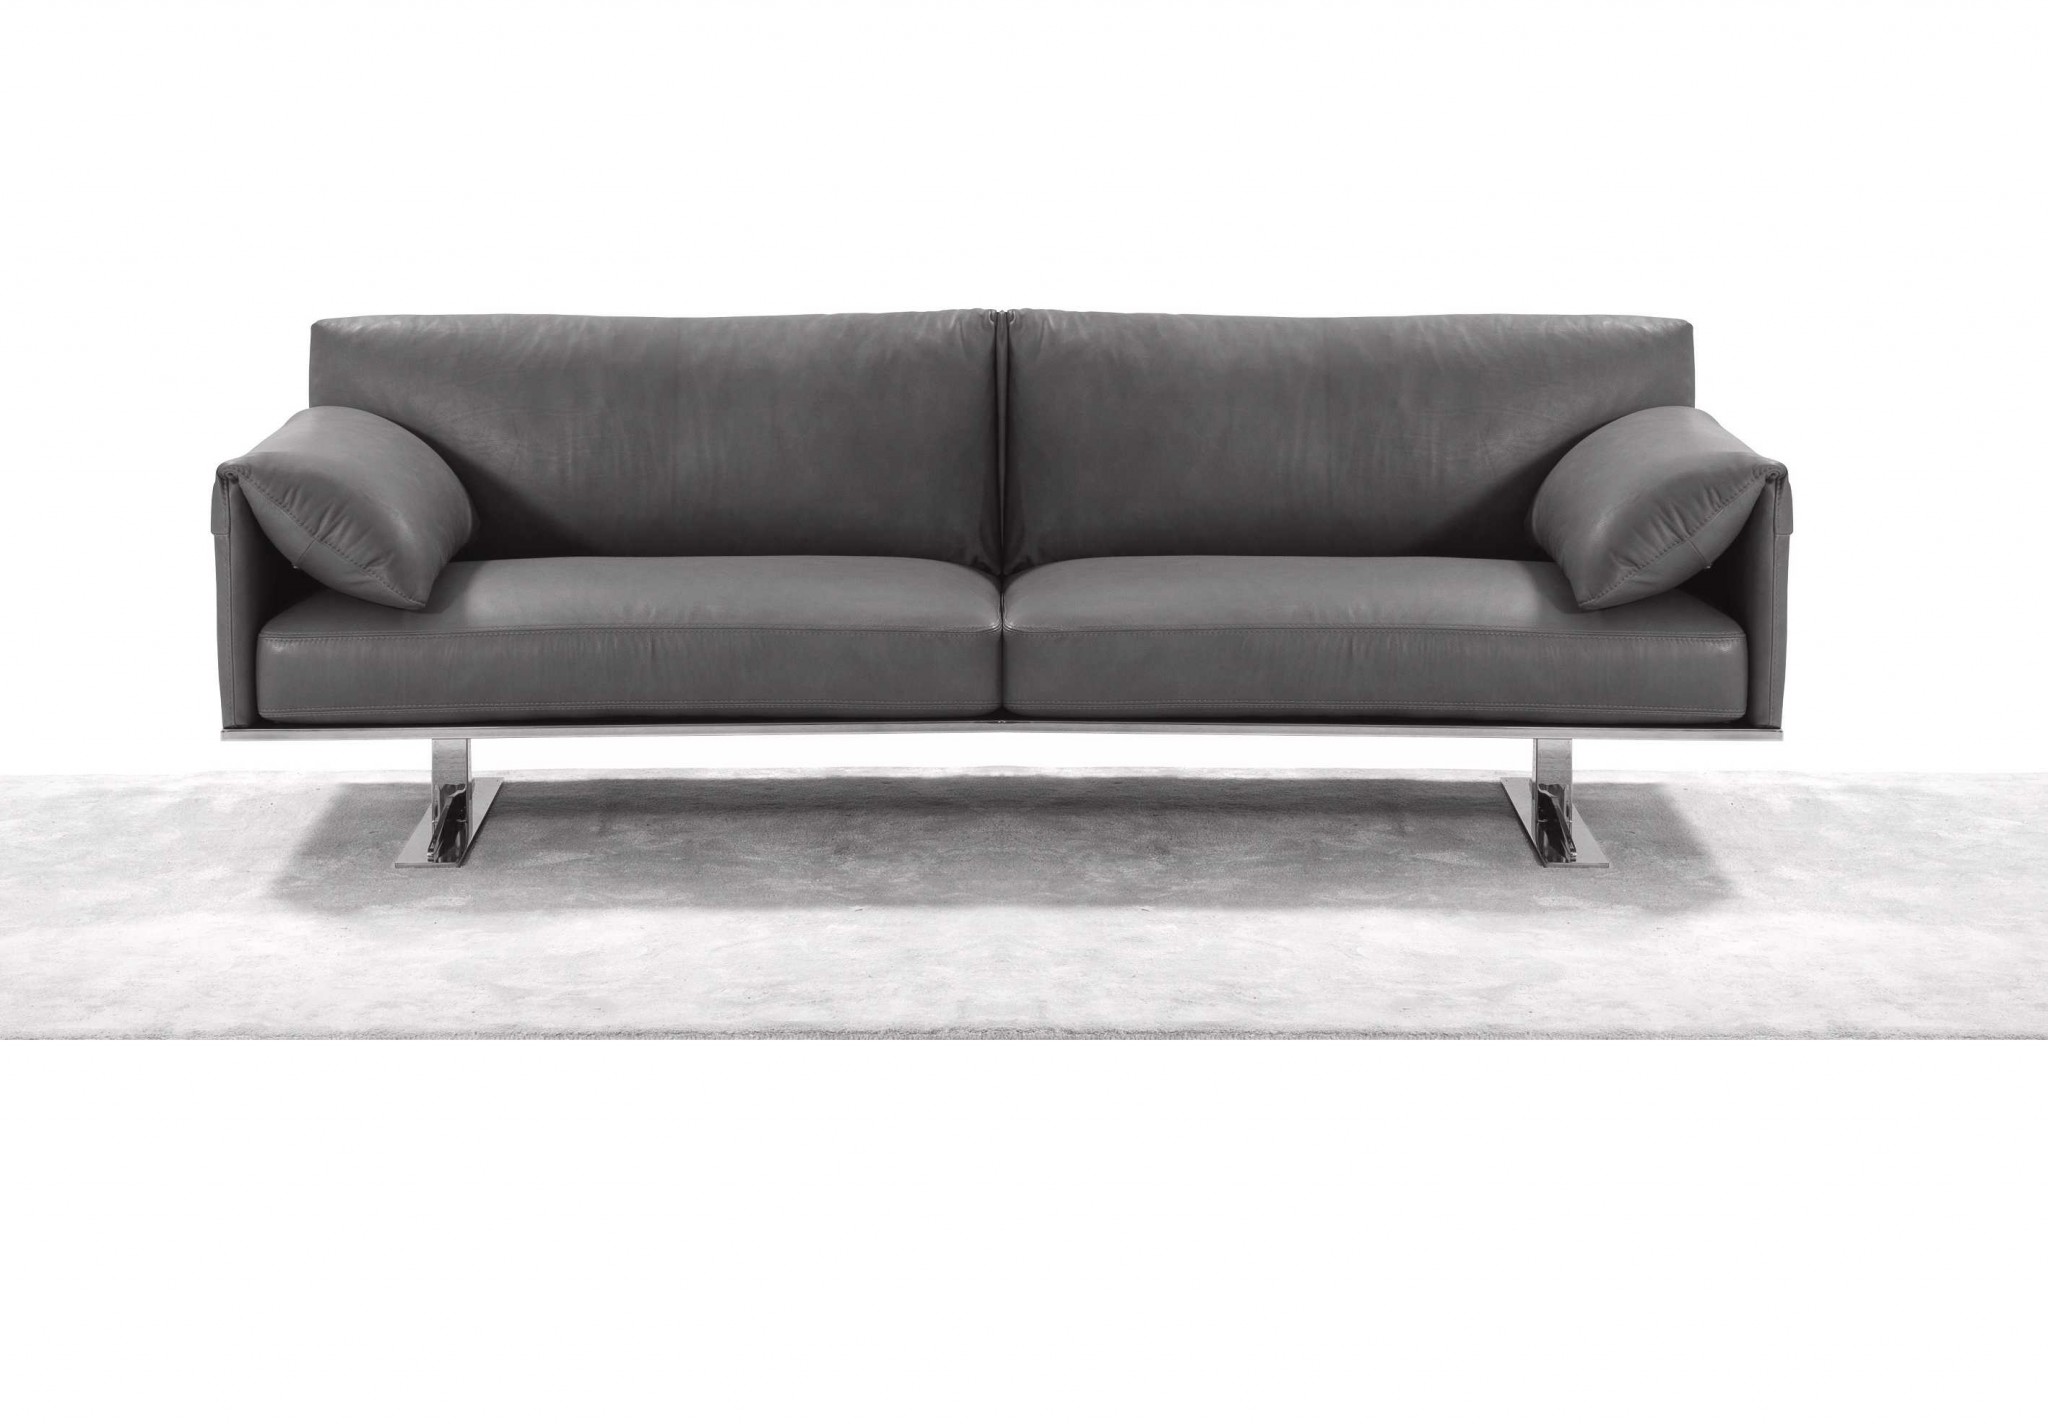 84" X 37" X 31" Gray Leather Sofa